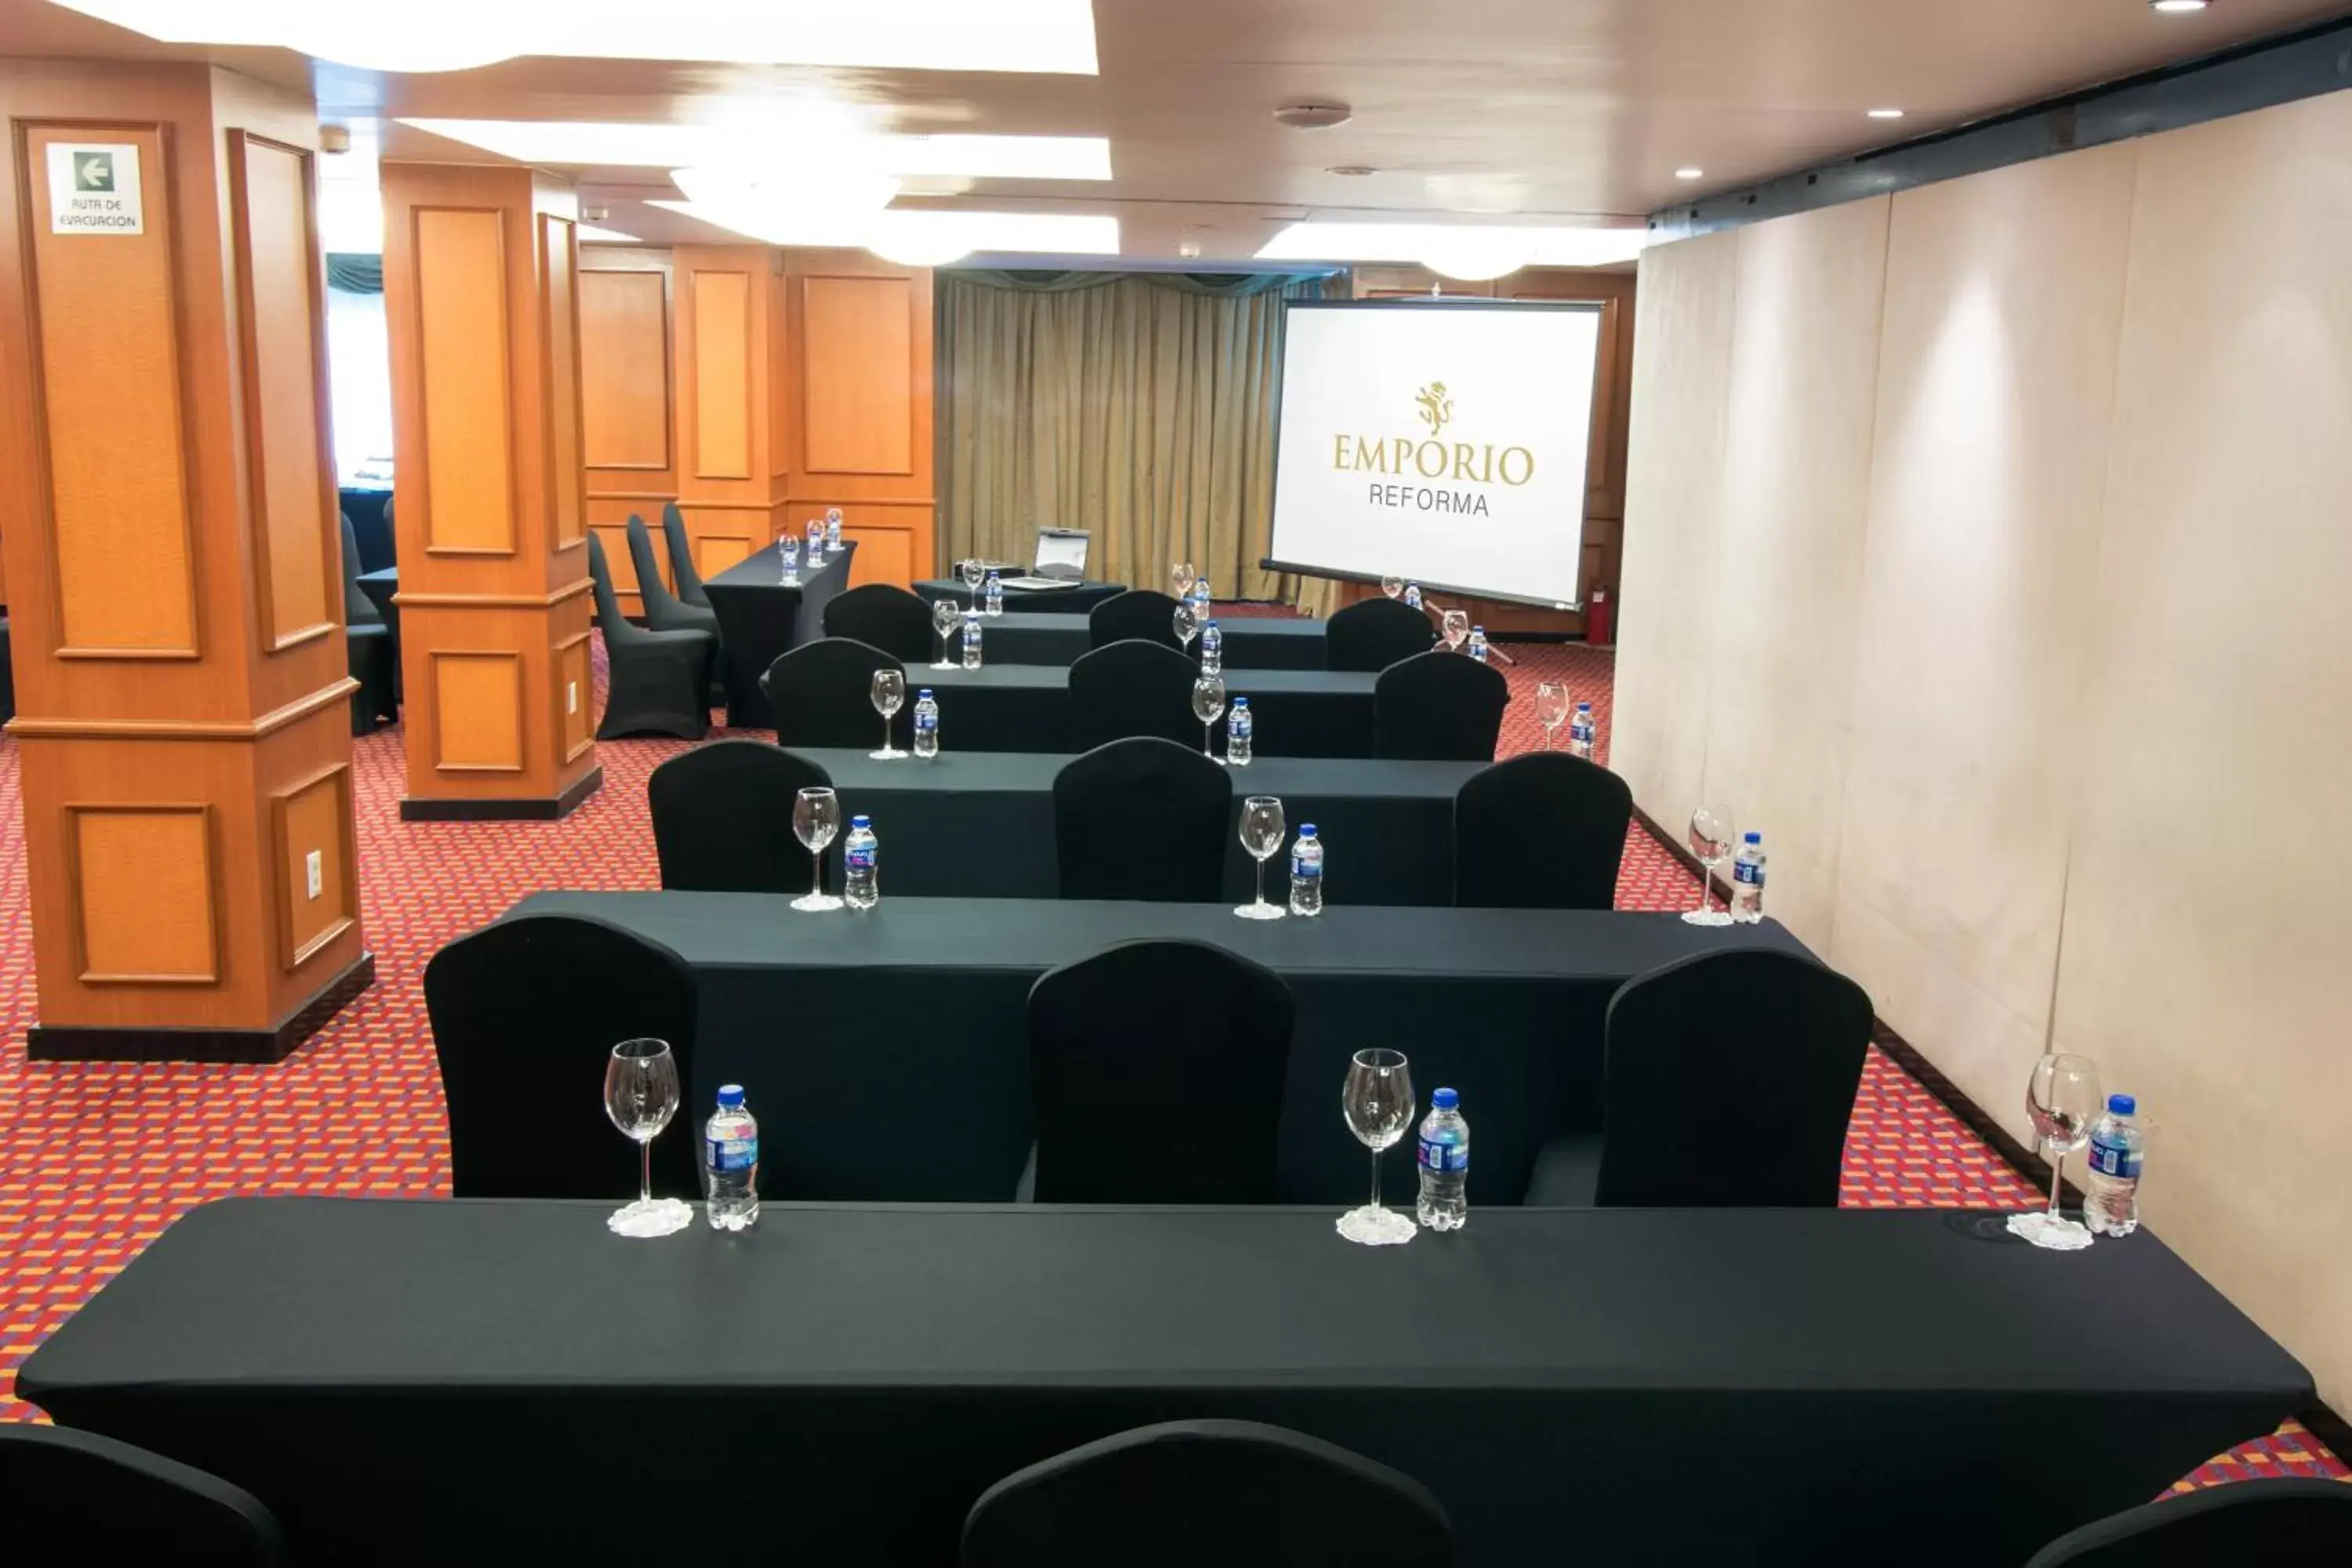 Meeting/conference room in Emporio Reforma